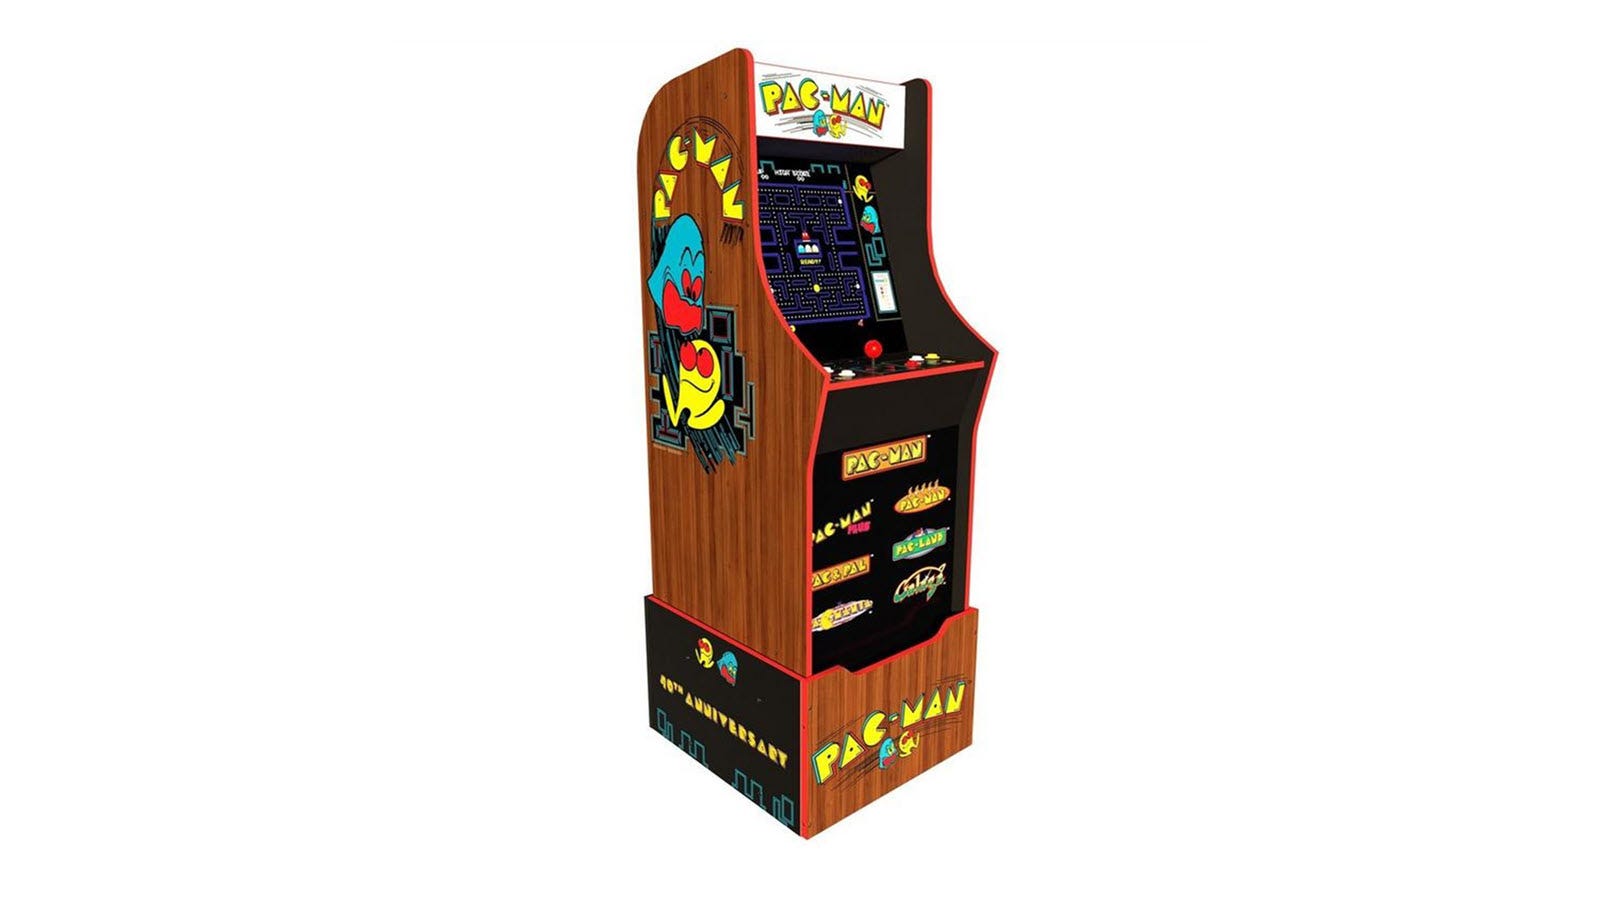 Arcade1Up PAC-MAN 40th Anniversary Edition.